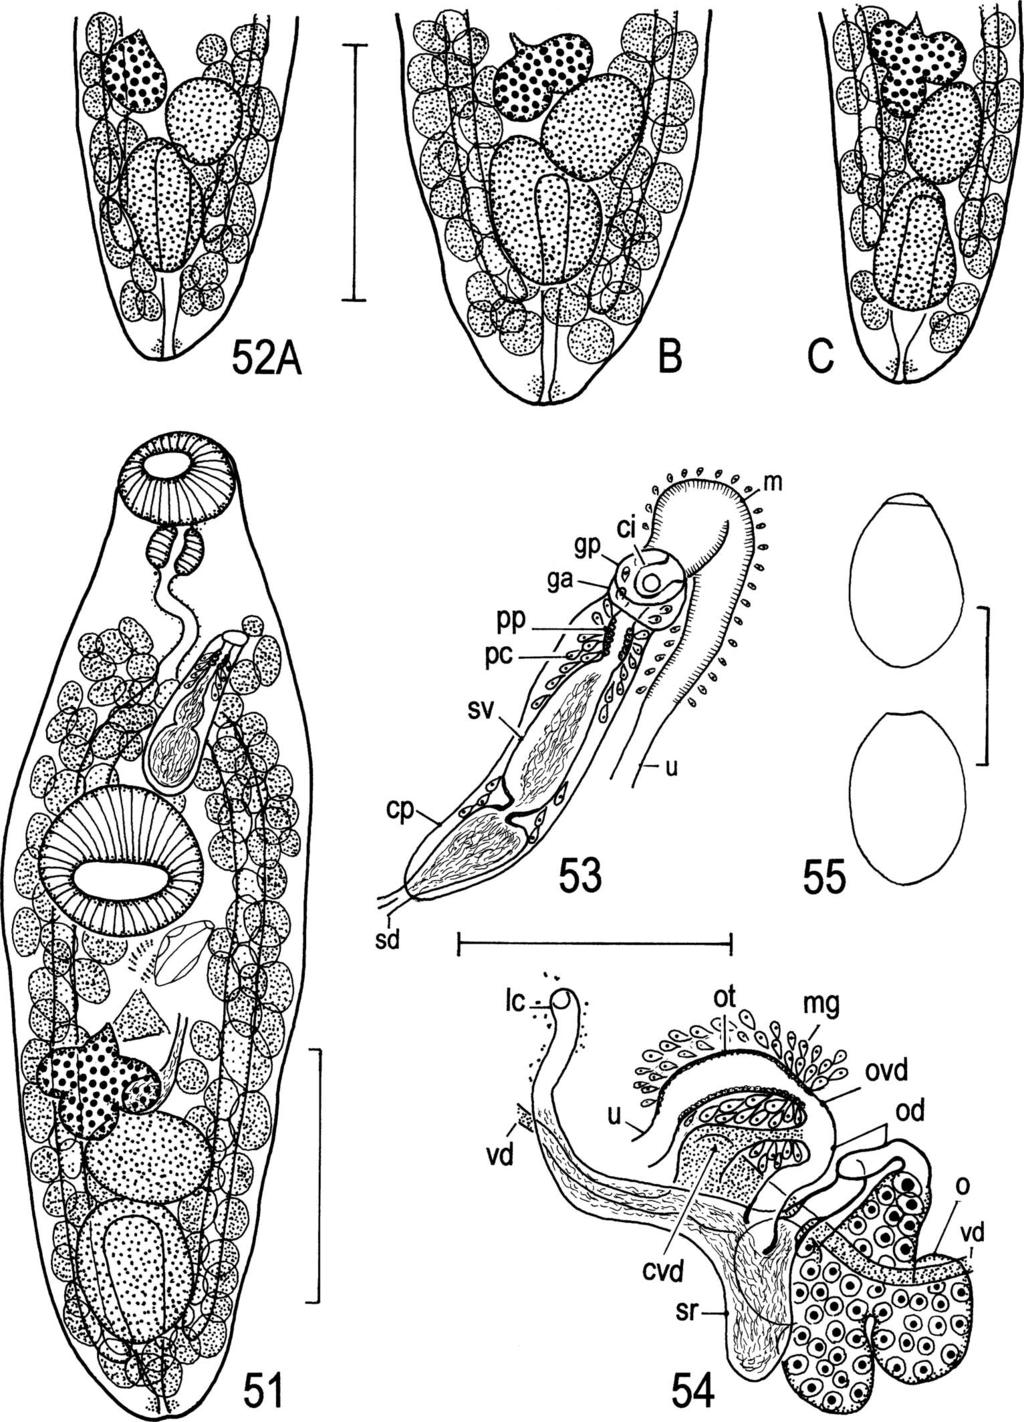 44 T. Shimazu et al. Figs. 51 55. Neoplagioporus elongatus. Adult specimens of elongatus type. 51, specimen (MPM Coll. No.